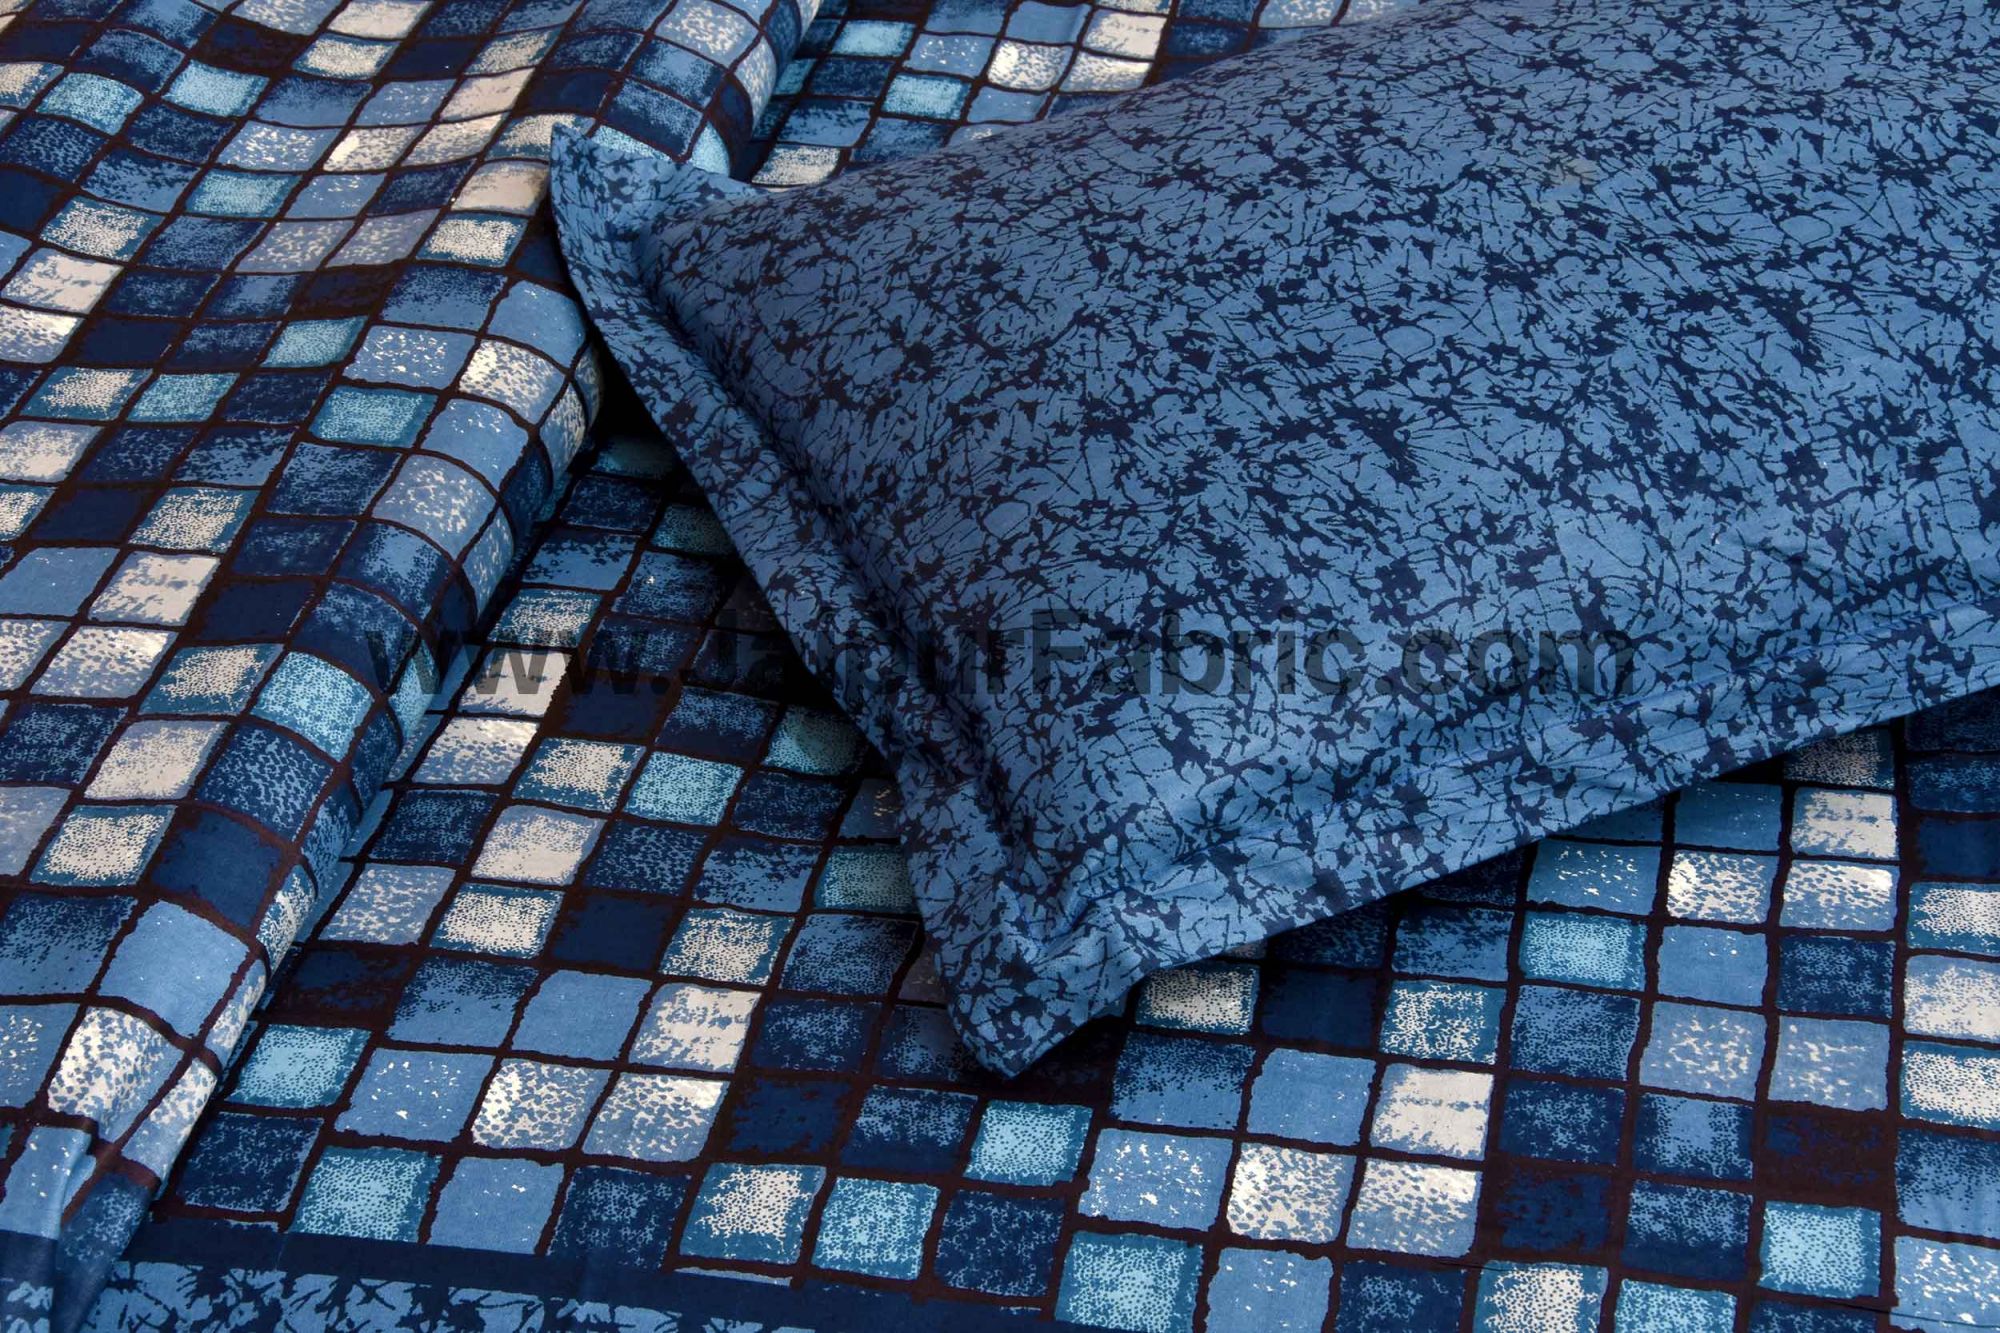 Procion Blue Boxy Beauty Double Bedsheet